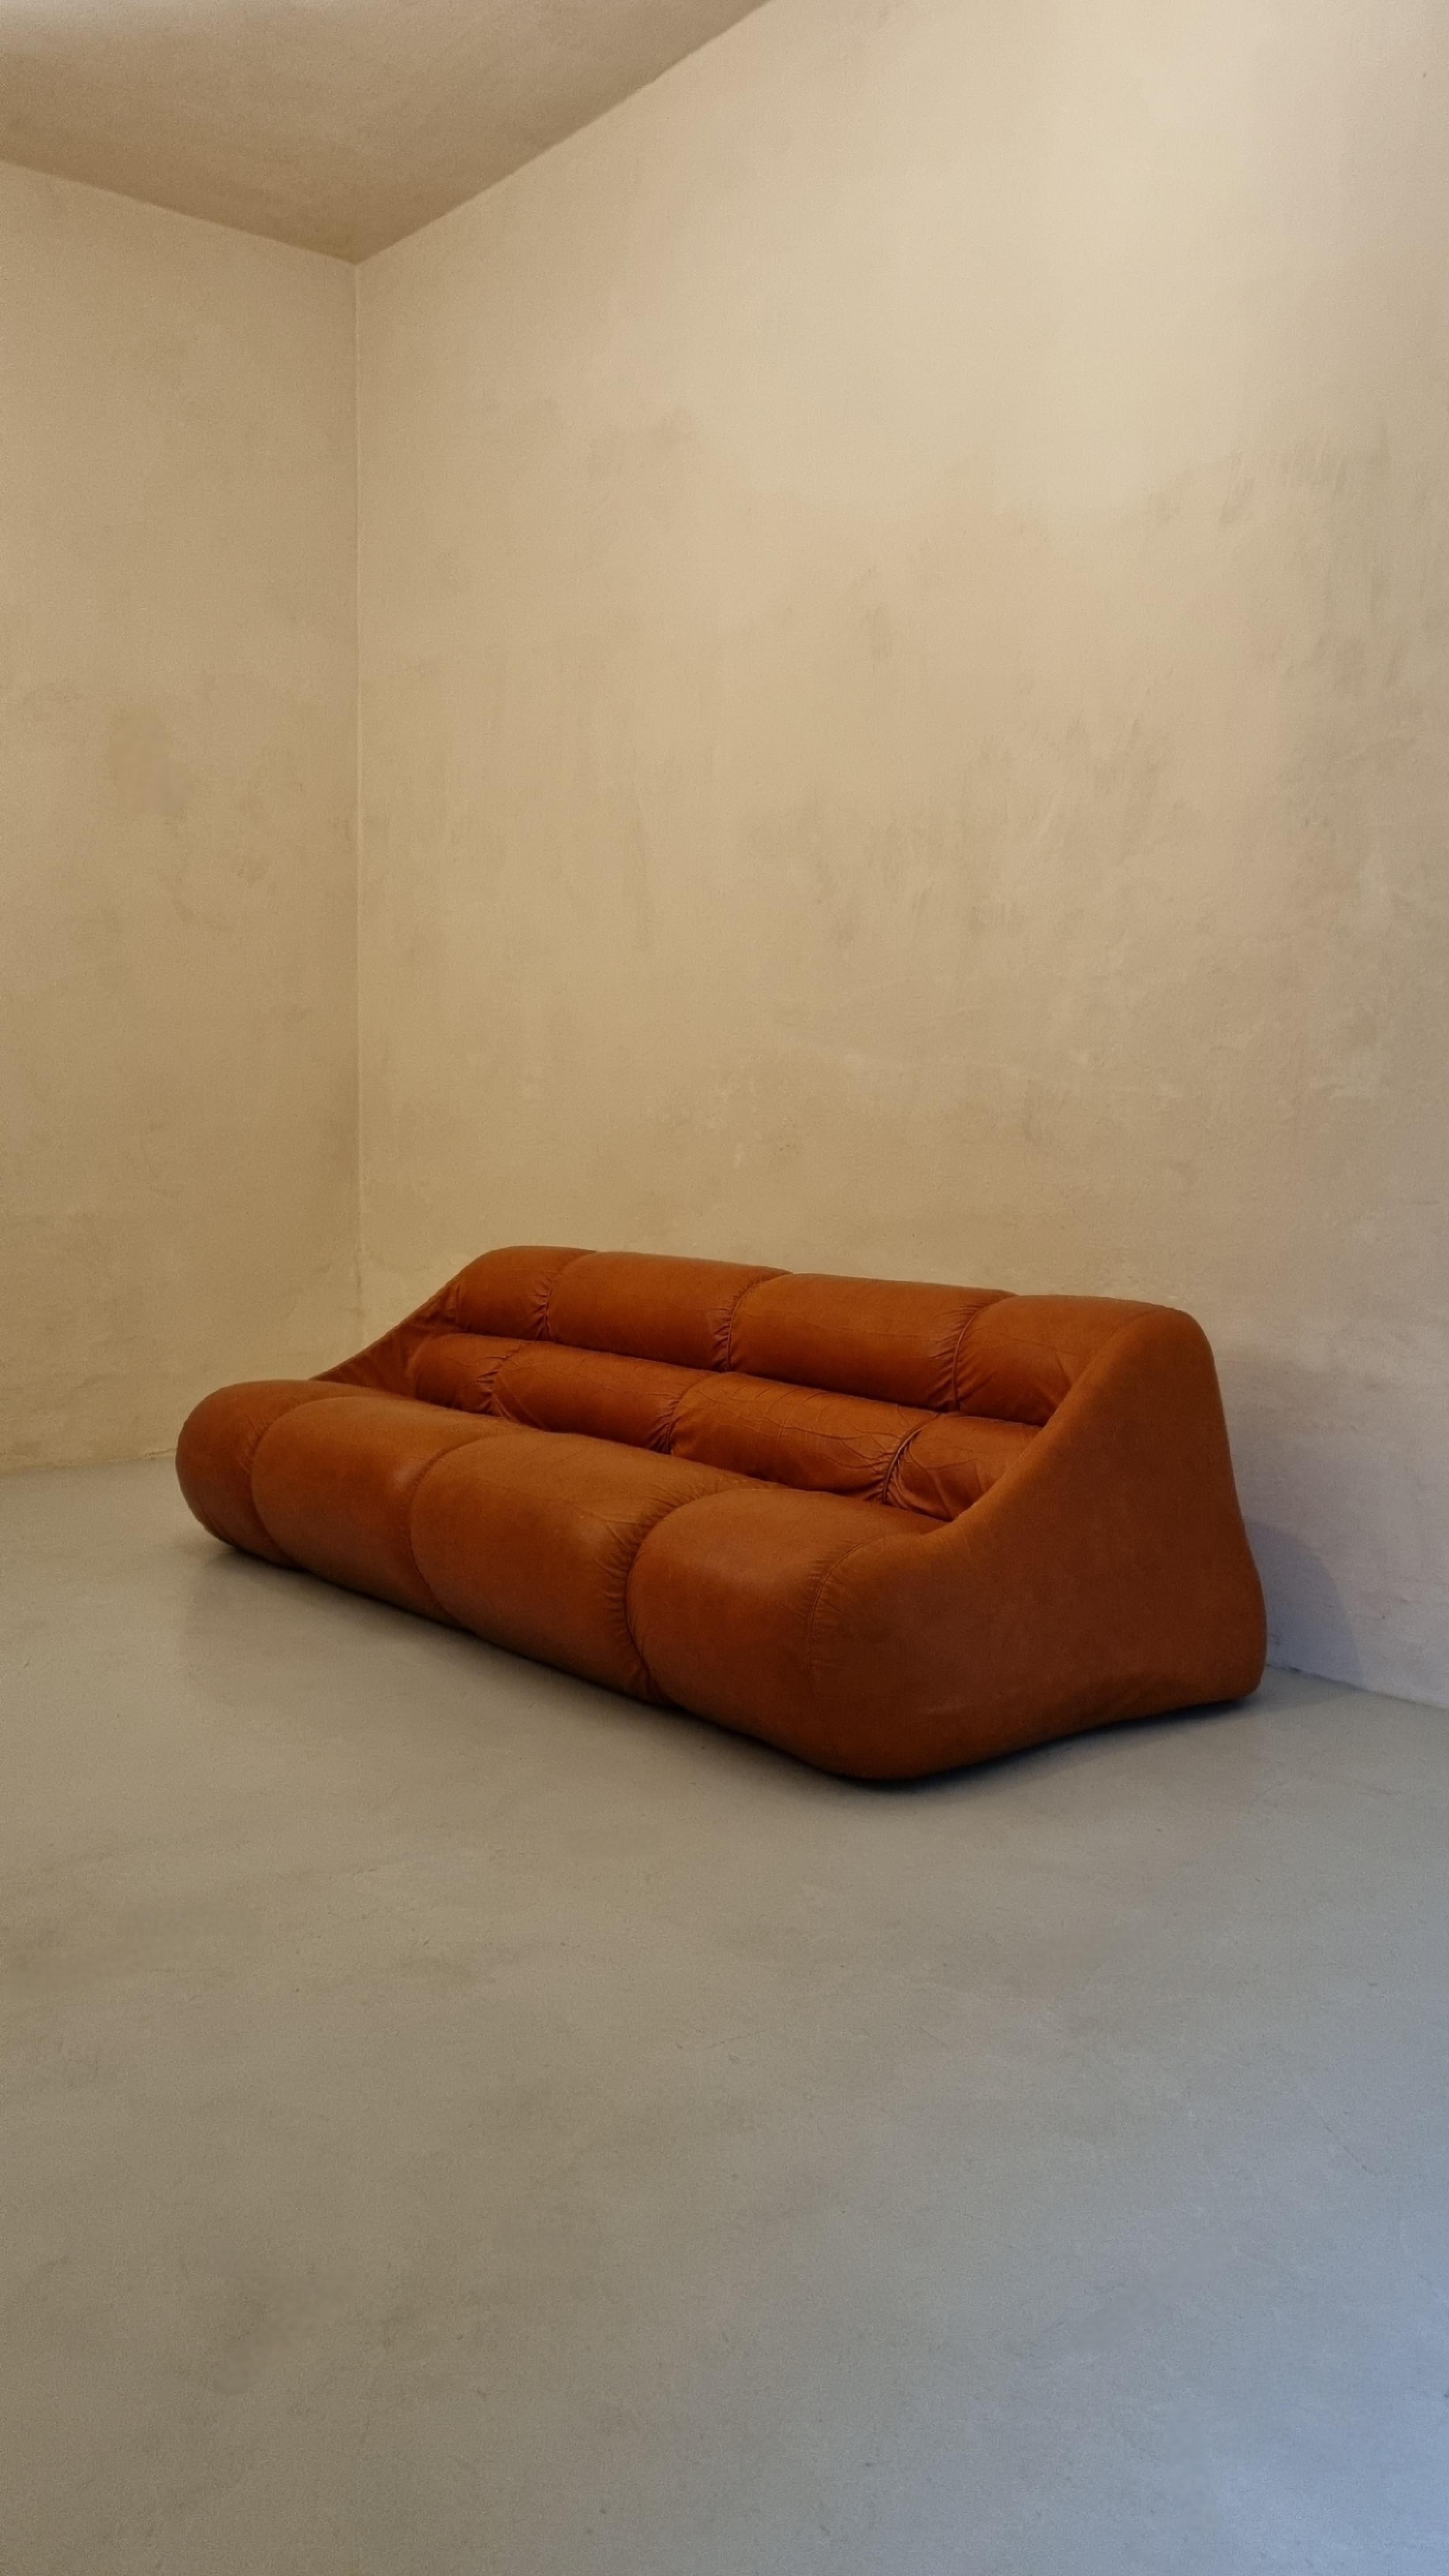 Ciuingam 3 seater sofa designed by the designer trio De Pas D' Urbino & Lomazzi for BBB Bonacina in 1967.
Foam rubber padding, original leather, plastic.
Good condition, the skin is slightly worn in the sitting.
Jonathan De Pas (Milan 1932 -